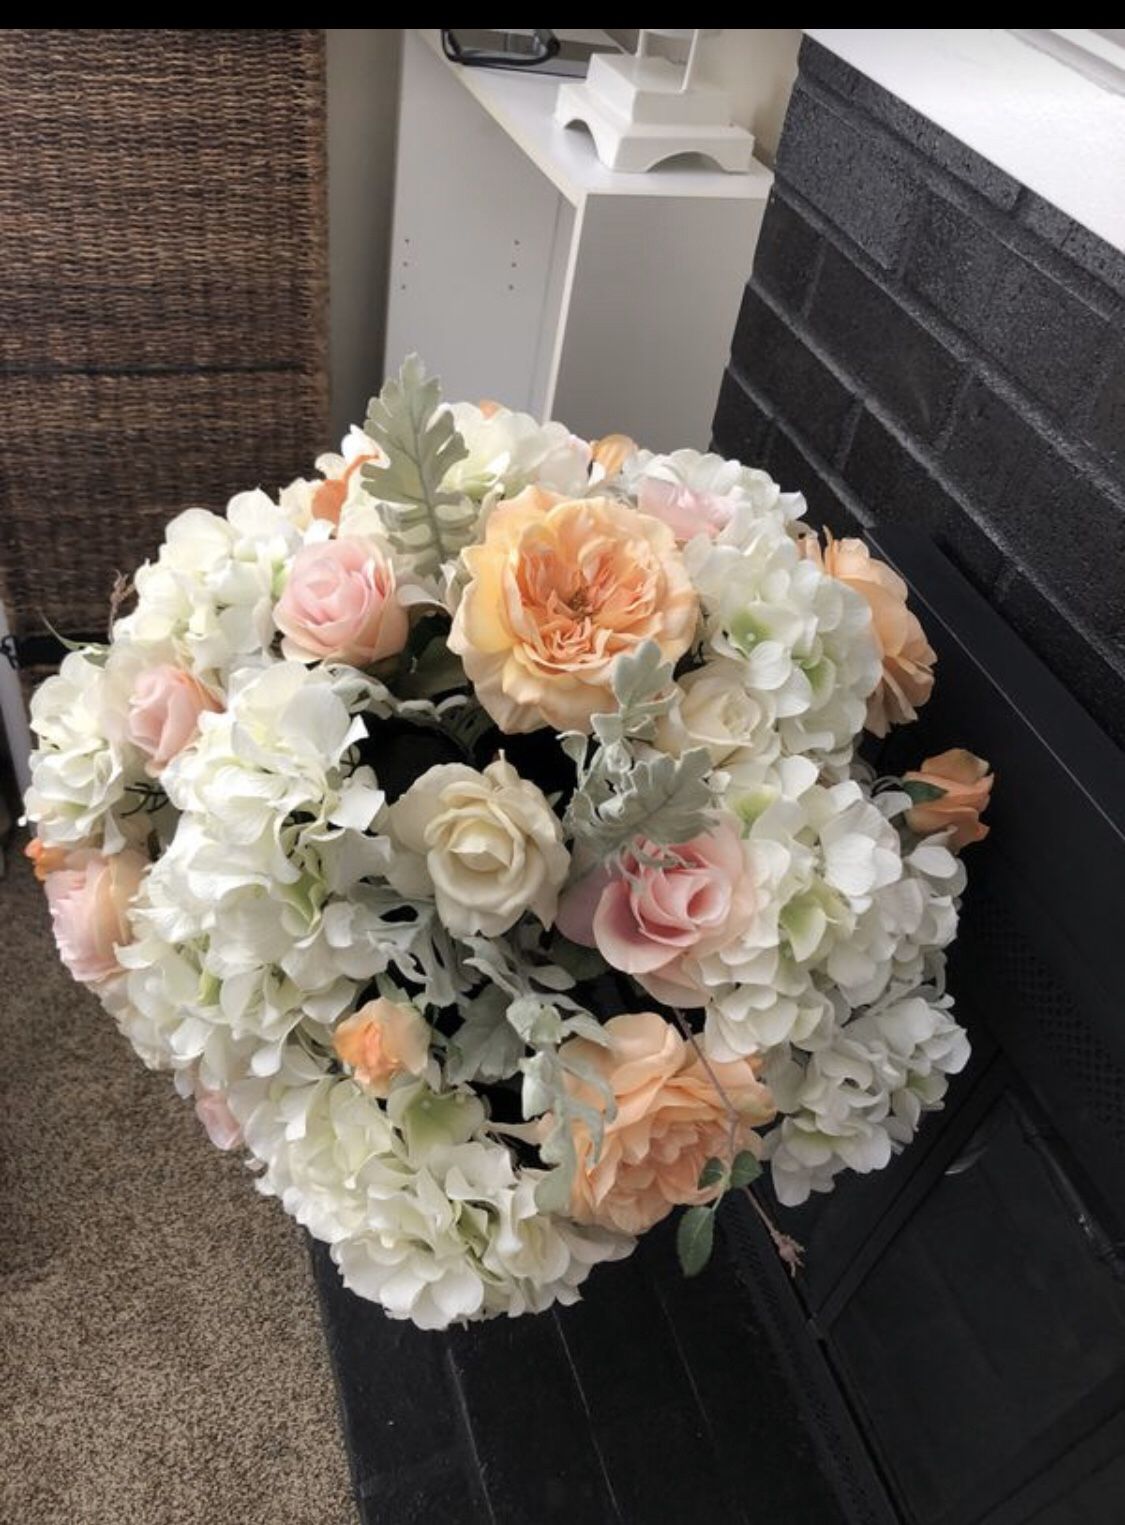 Flower arrangements with vase